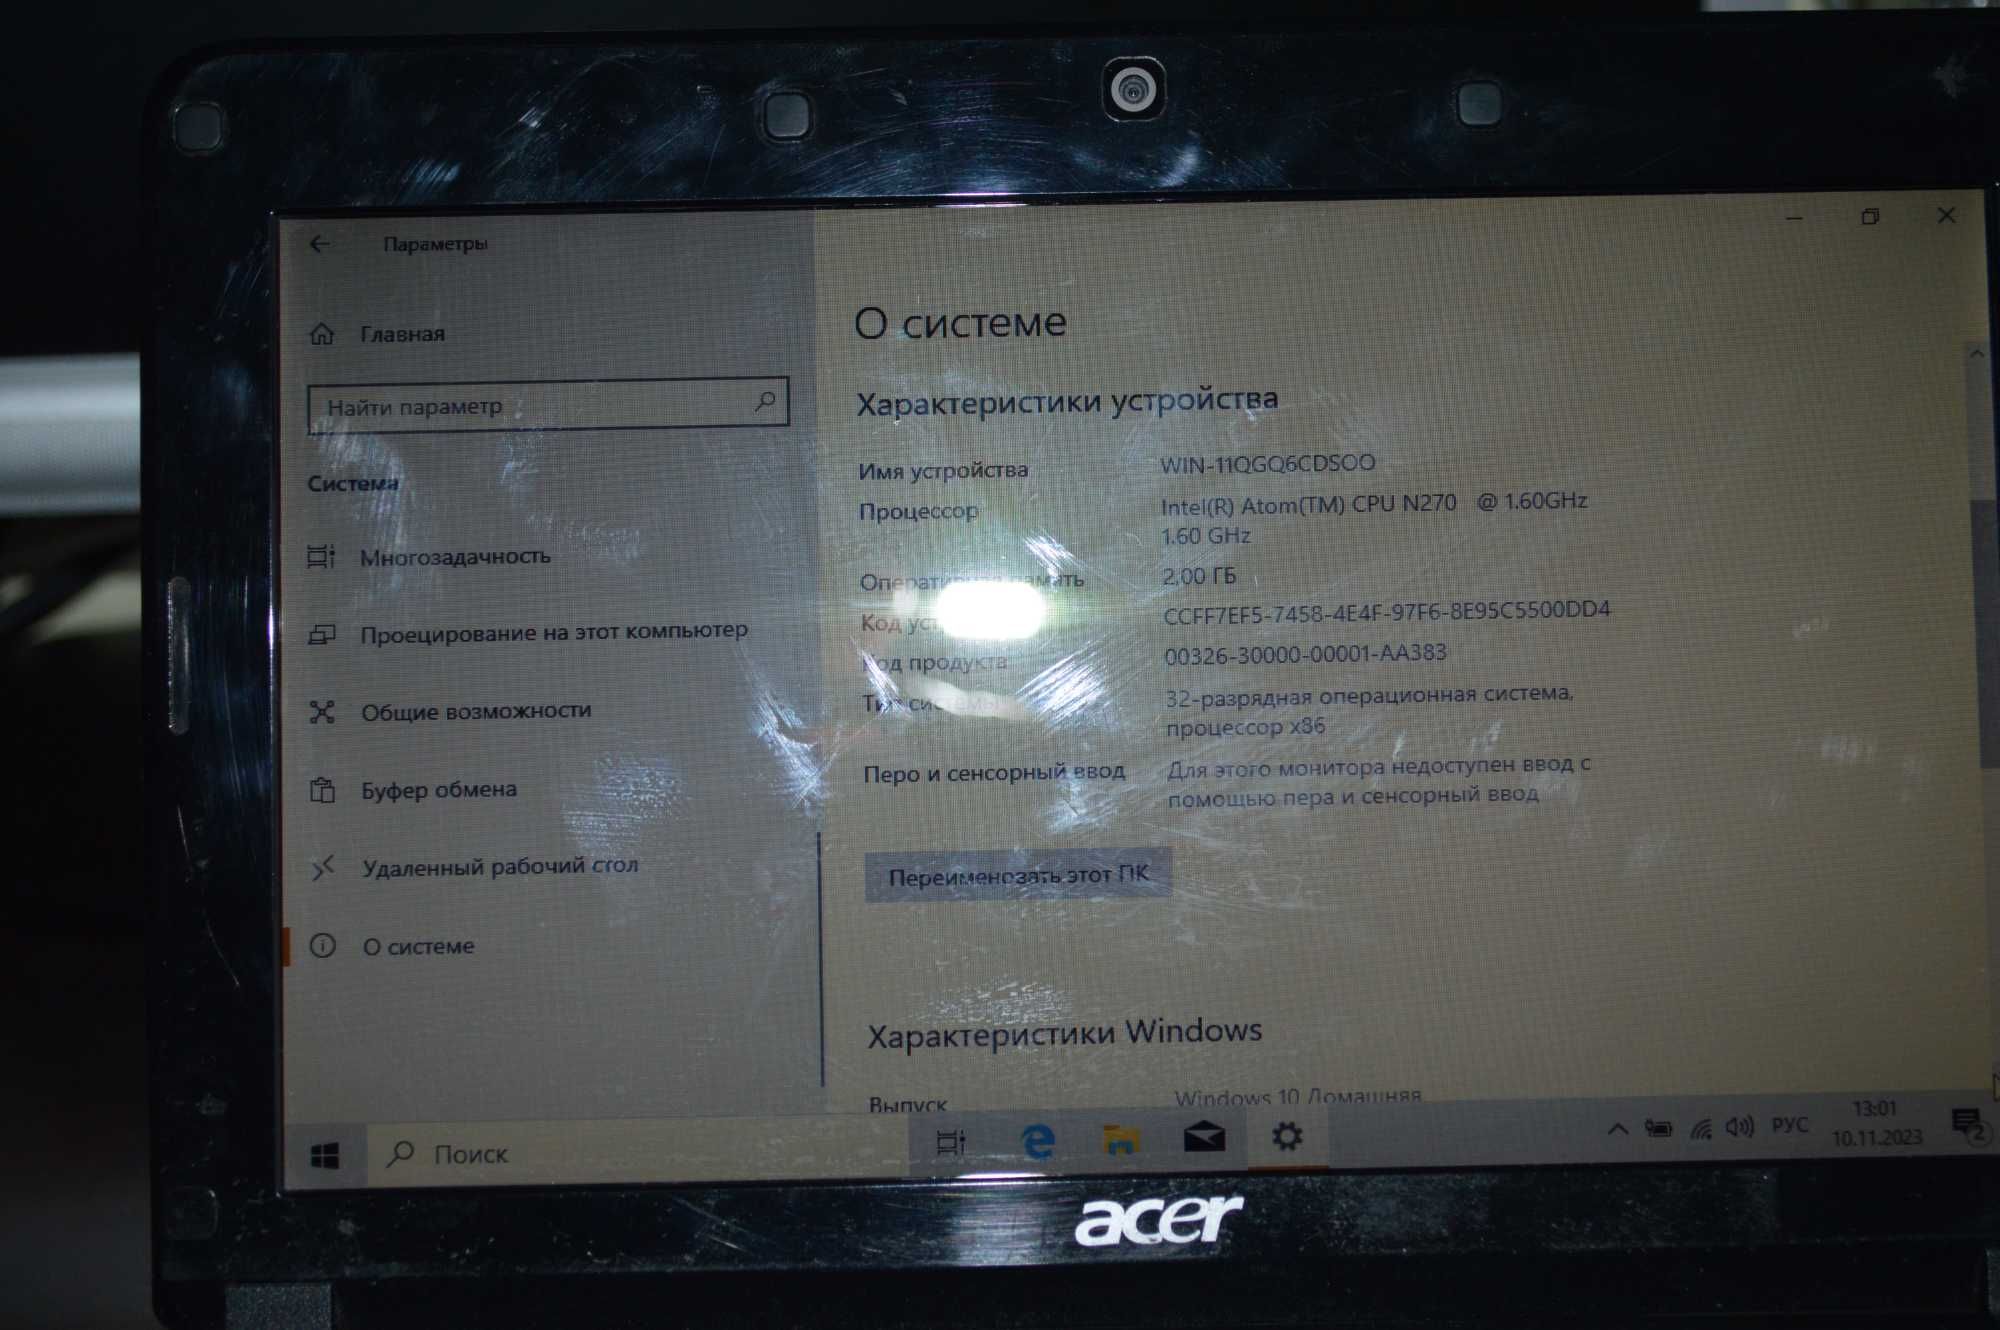 Нетбук Acer KAV10 10.1 Intel N280 2 RAM 160 HDD